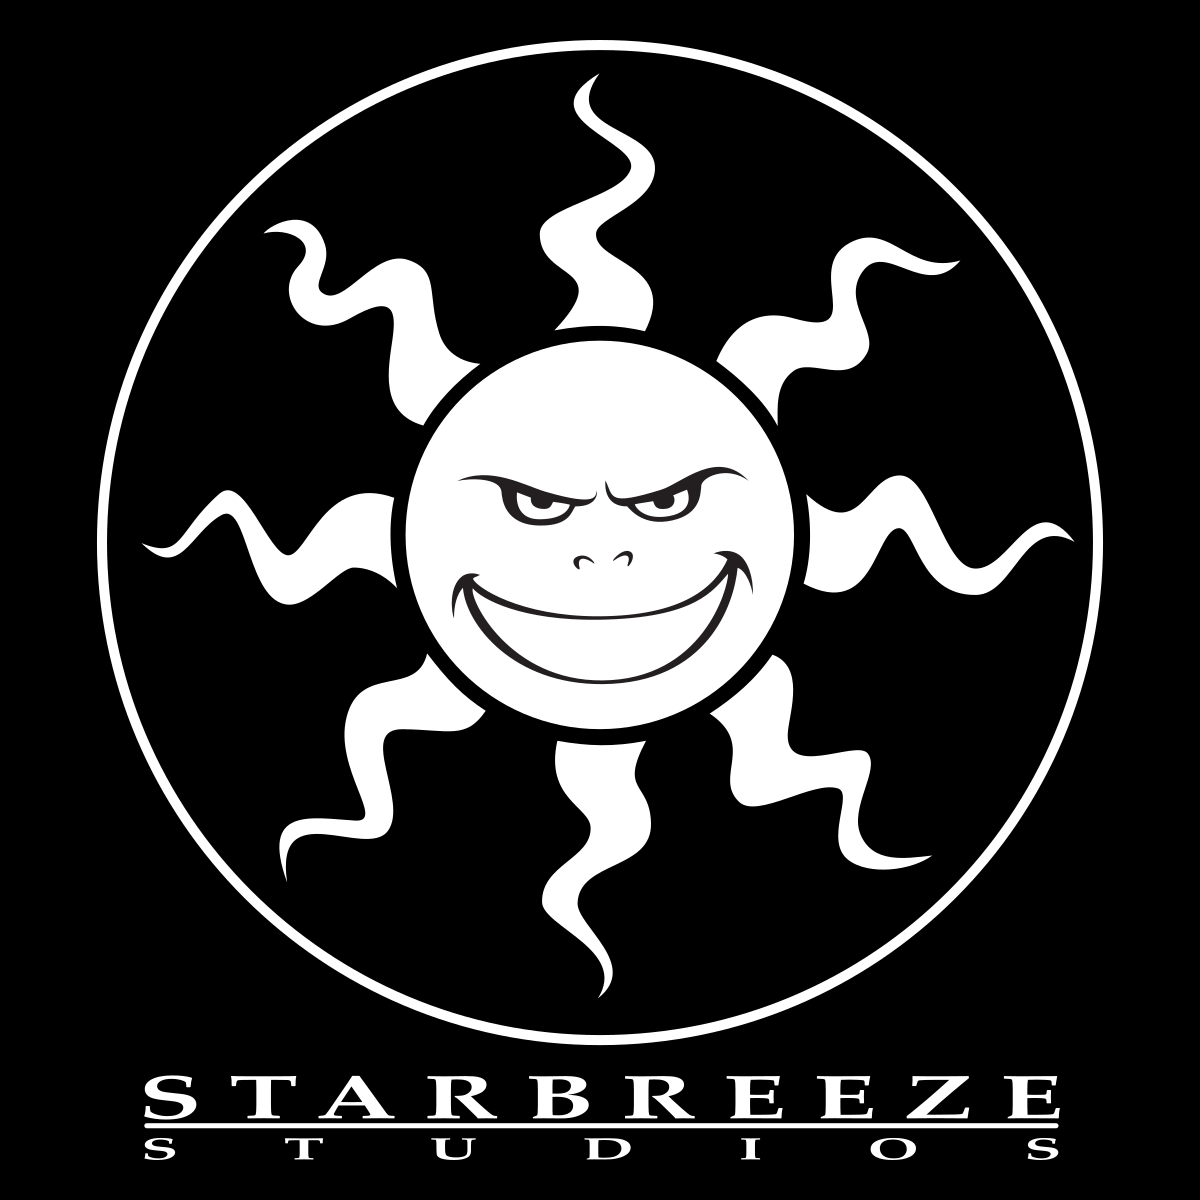 Starbreeze Studios - Wikipedia